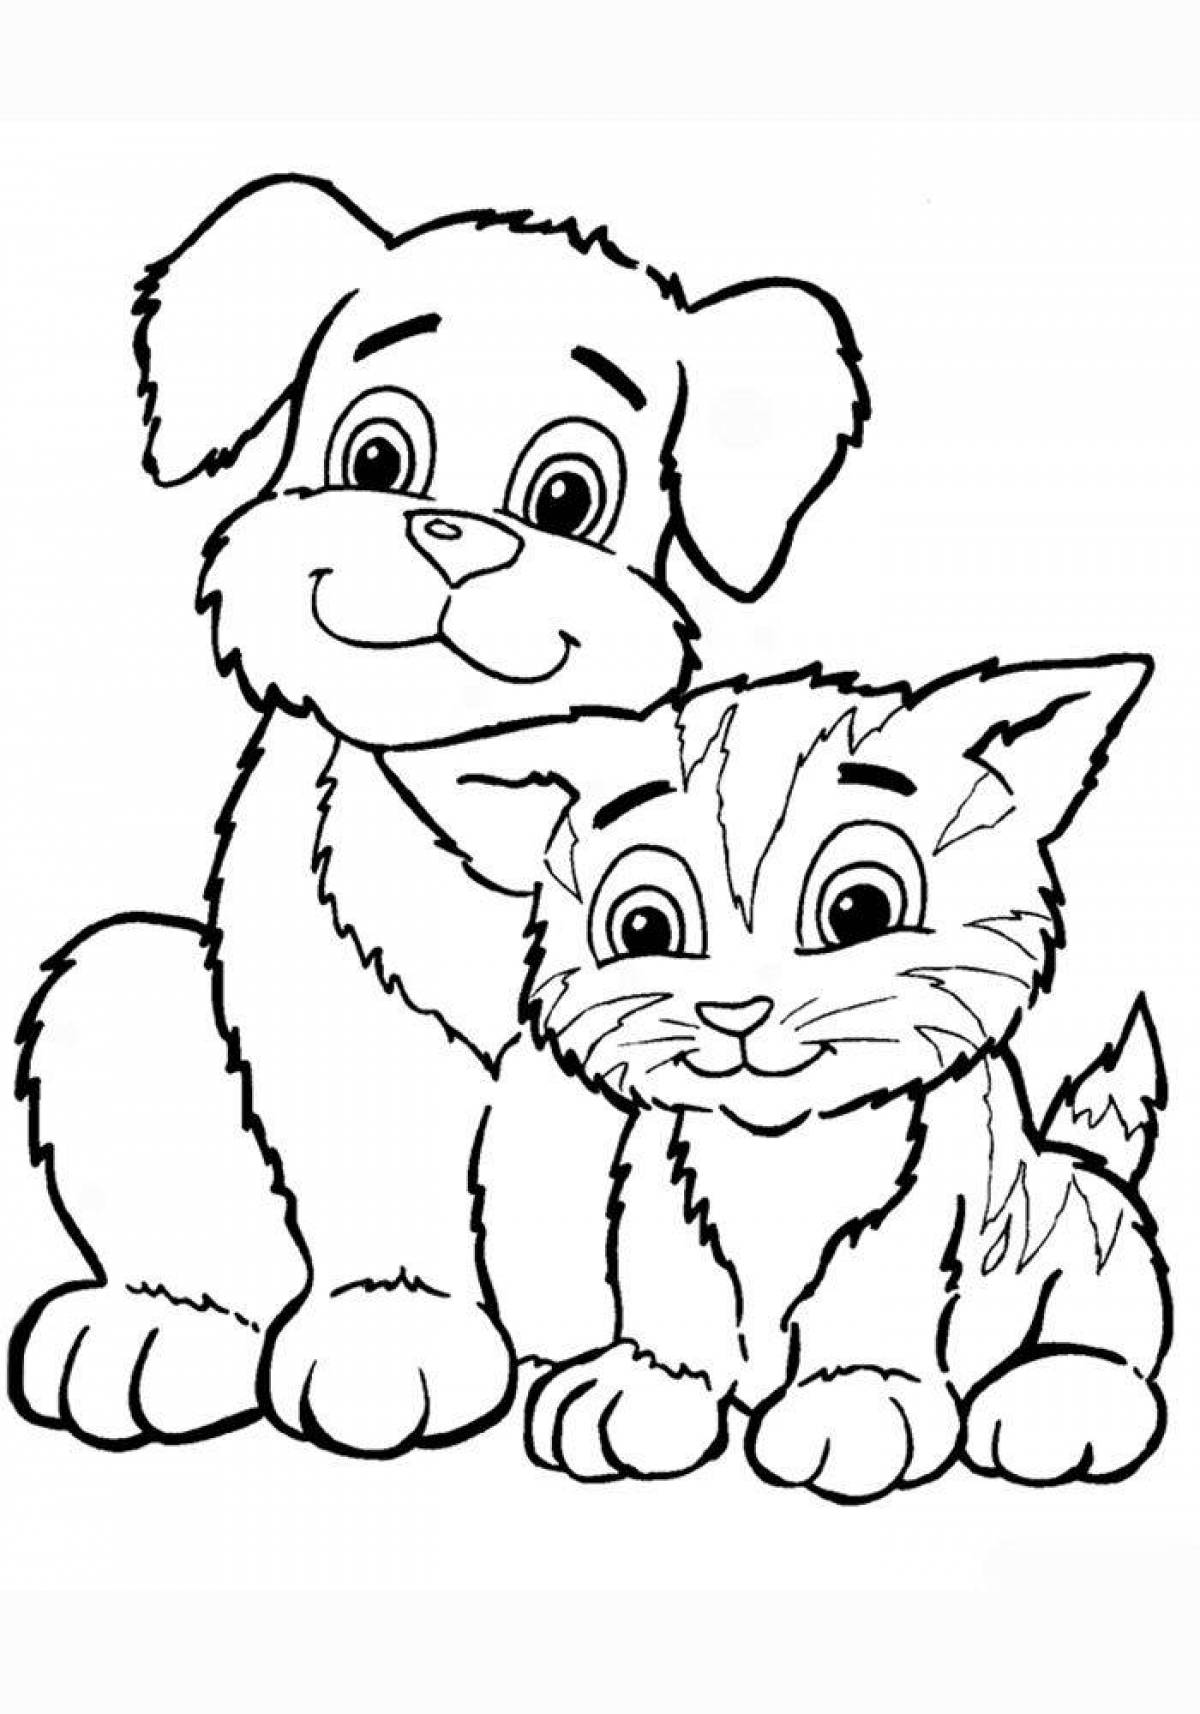 Joyful coloring dog kittens